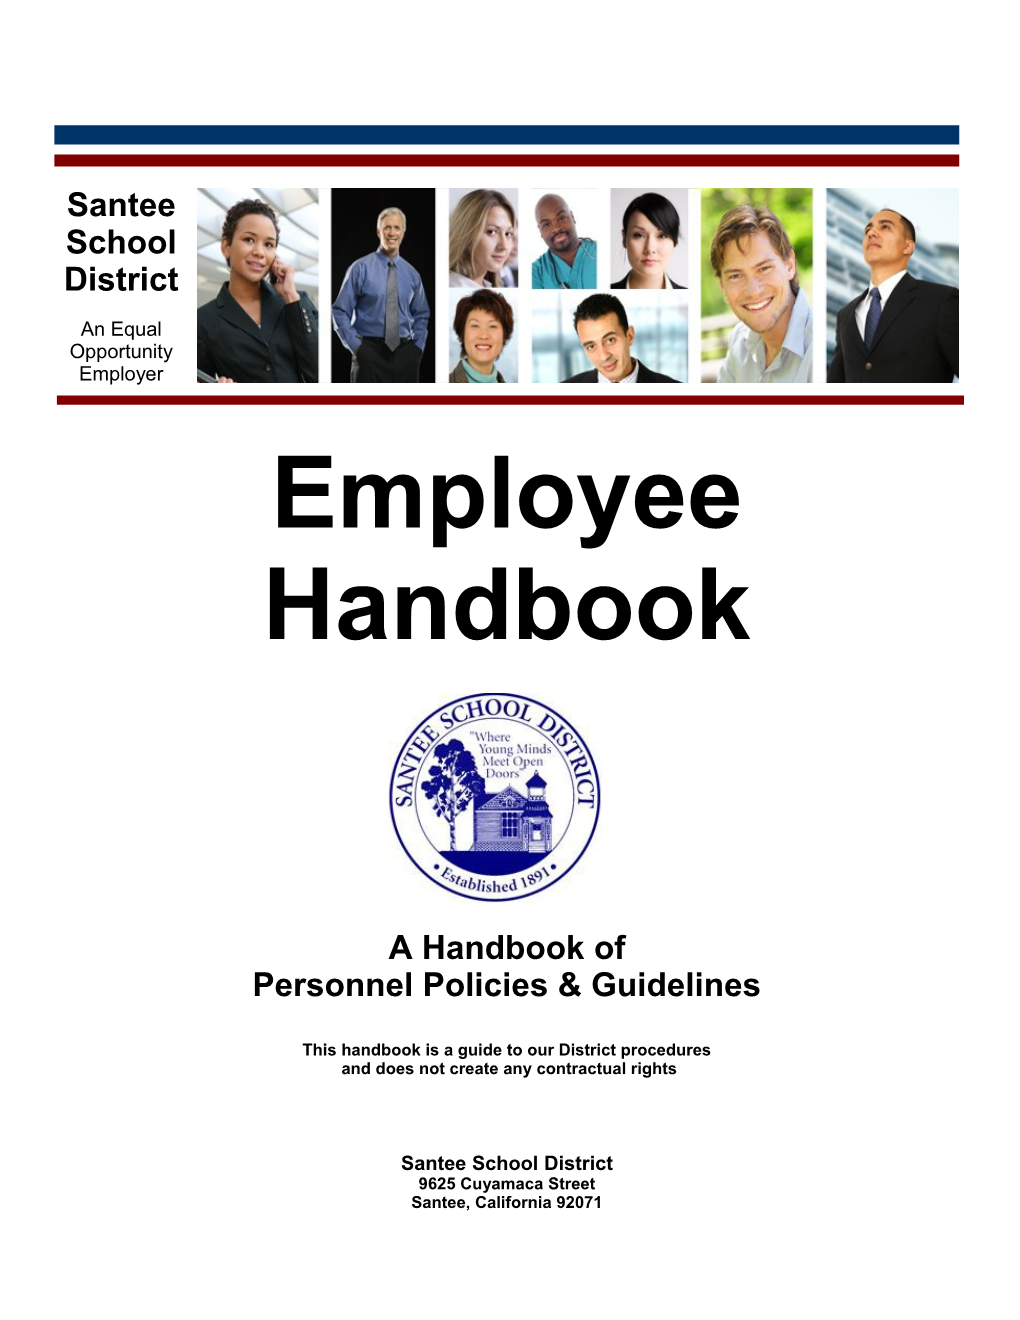 Employee Handbook Table of Contents